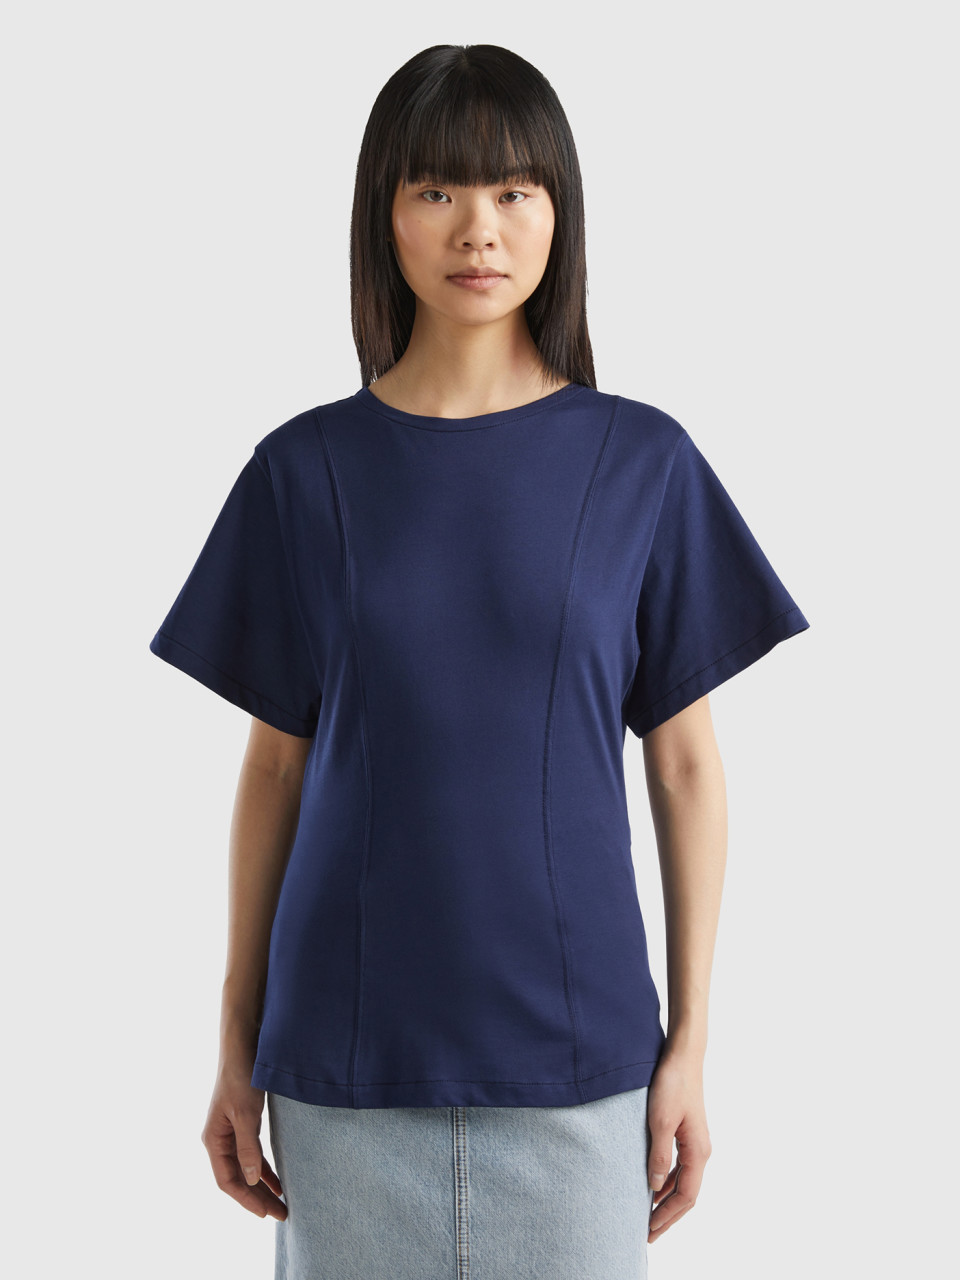 Benetton, Warm Fitted T-shirt, Dark Blue, Women